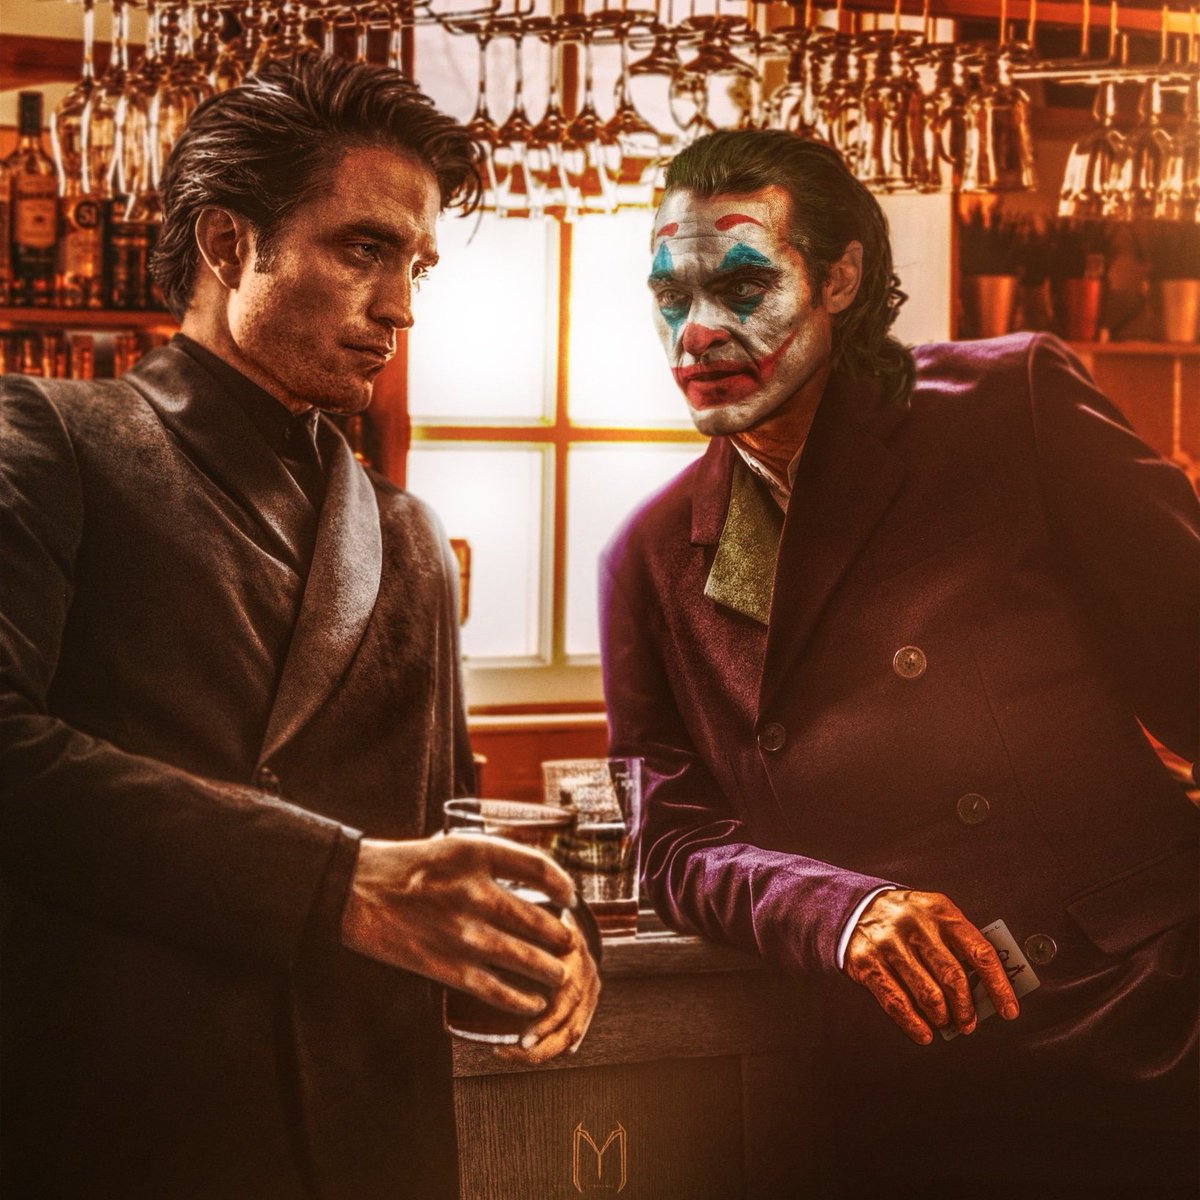 #BruceWayne #ArthurFleck #TheBatman #Joker